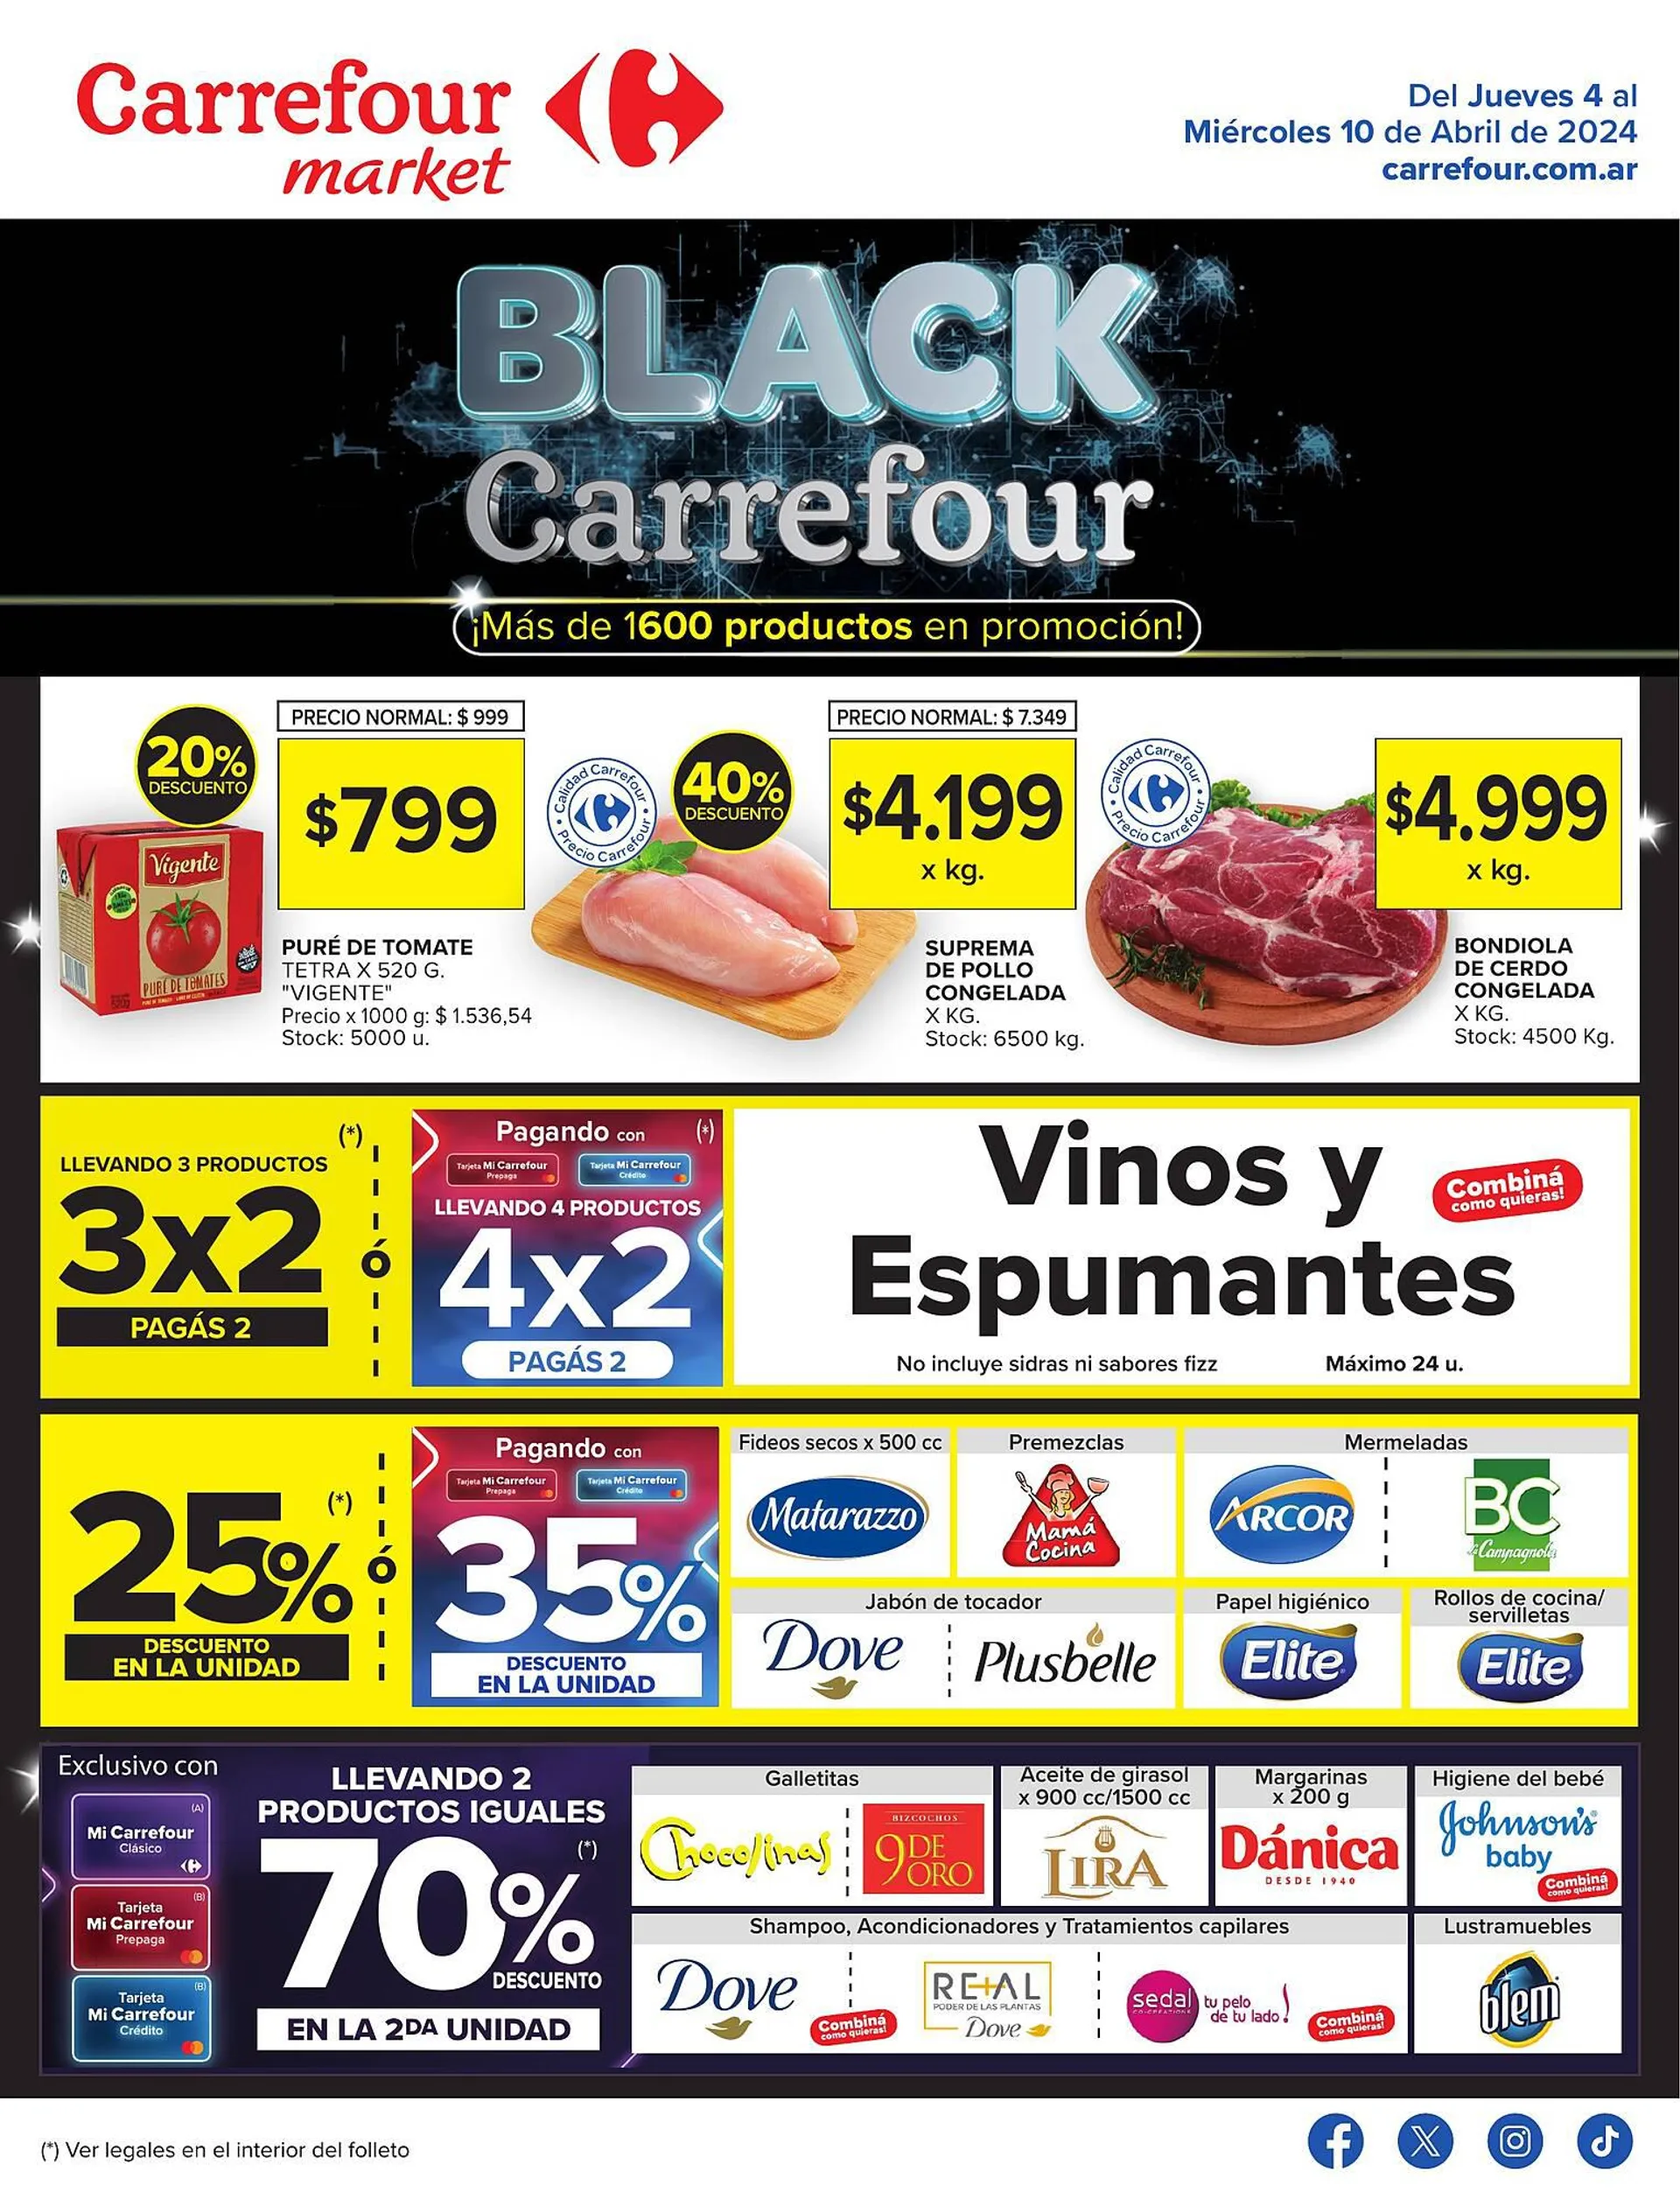 Ofertas de Catálogo Carrefour Market 8 de abril al 10 de abril 2024 - Página  del catálogo